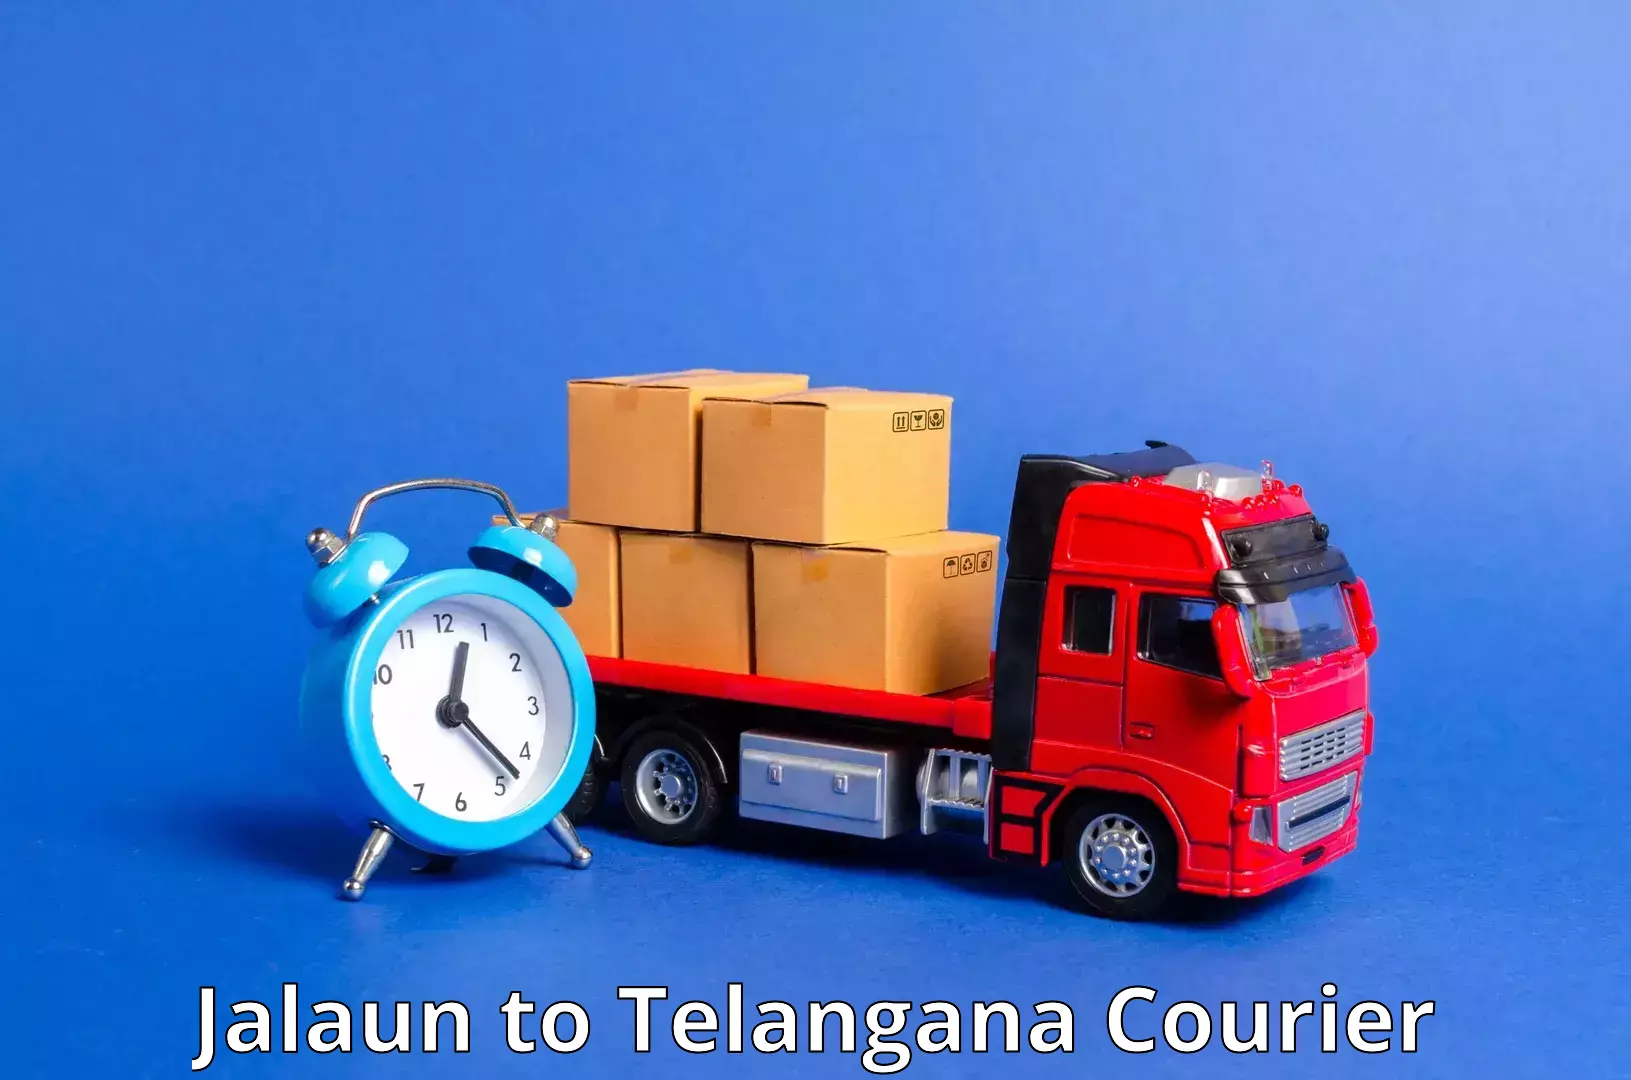 Courier service comparison Jalaun to Bhongir